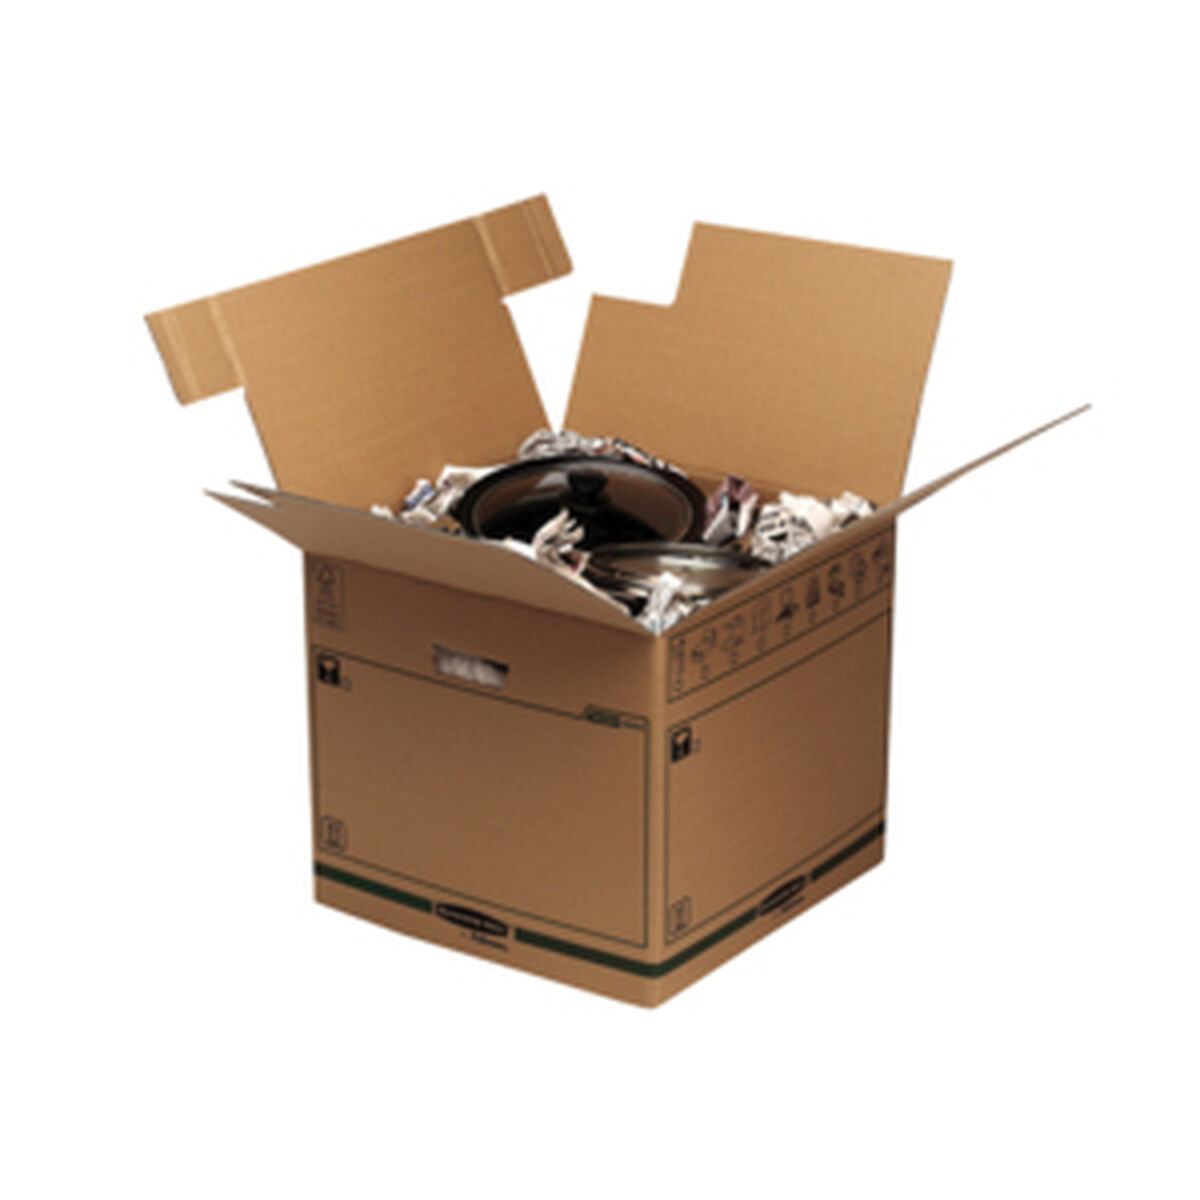 Cardboard box for moving Fellowes 41,2 X 48 X 47 cm